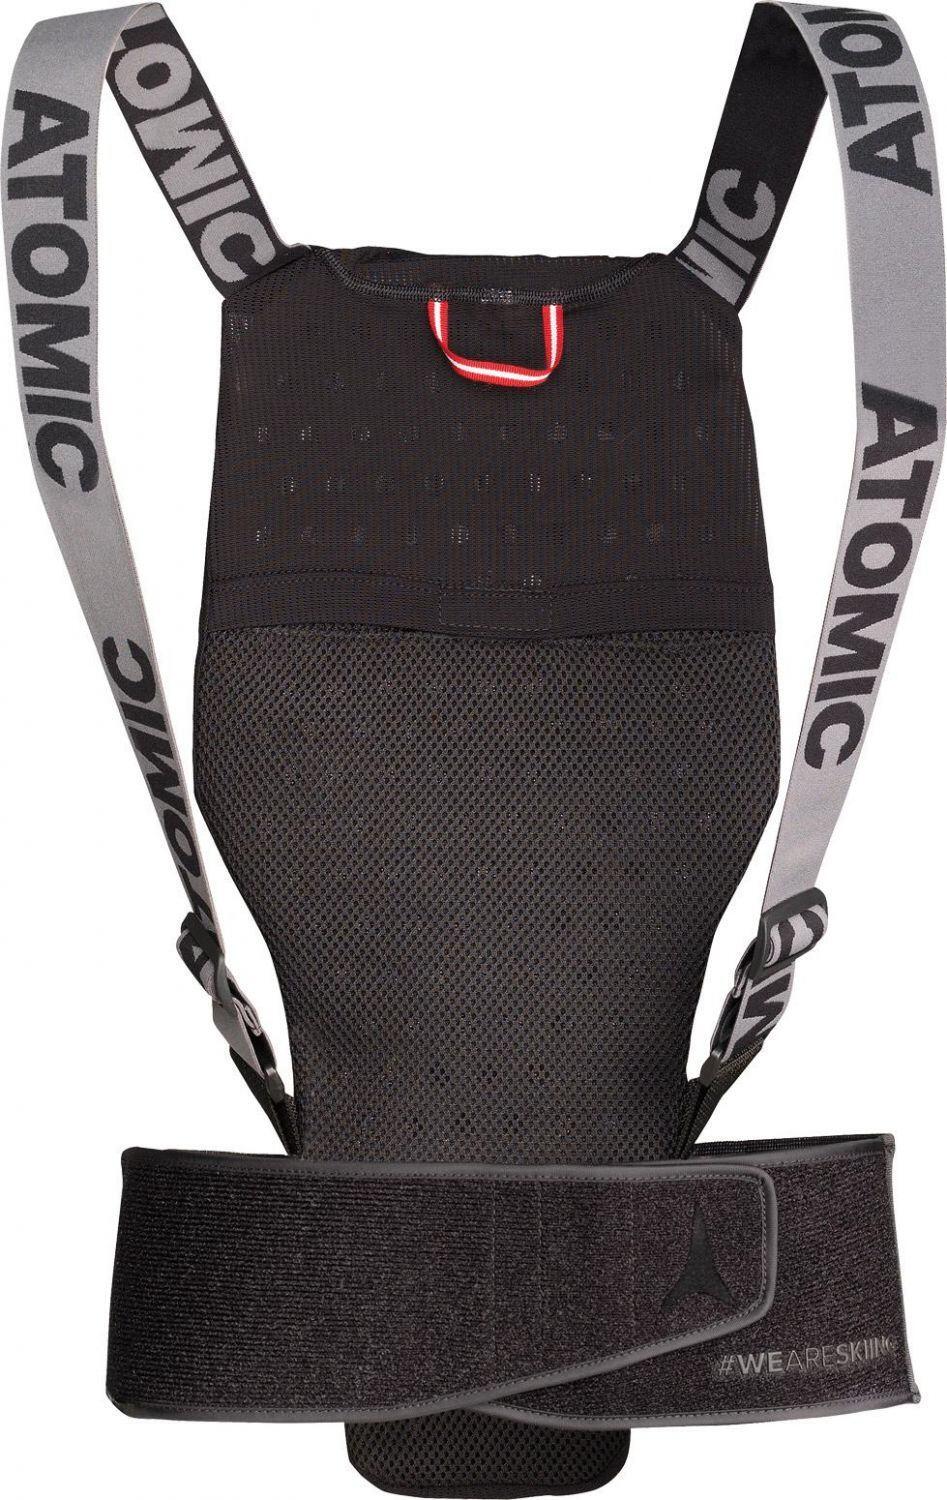 Atomic Damen/Herren Live Shield Ski-Rückenprotektor, schwarz, XL